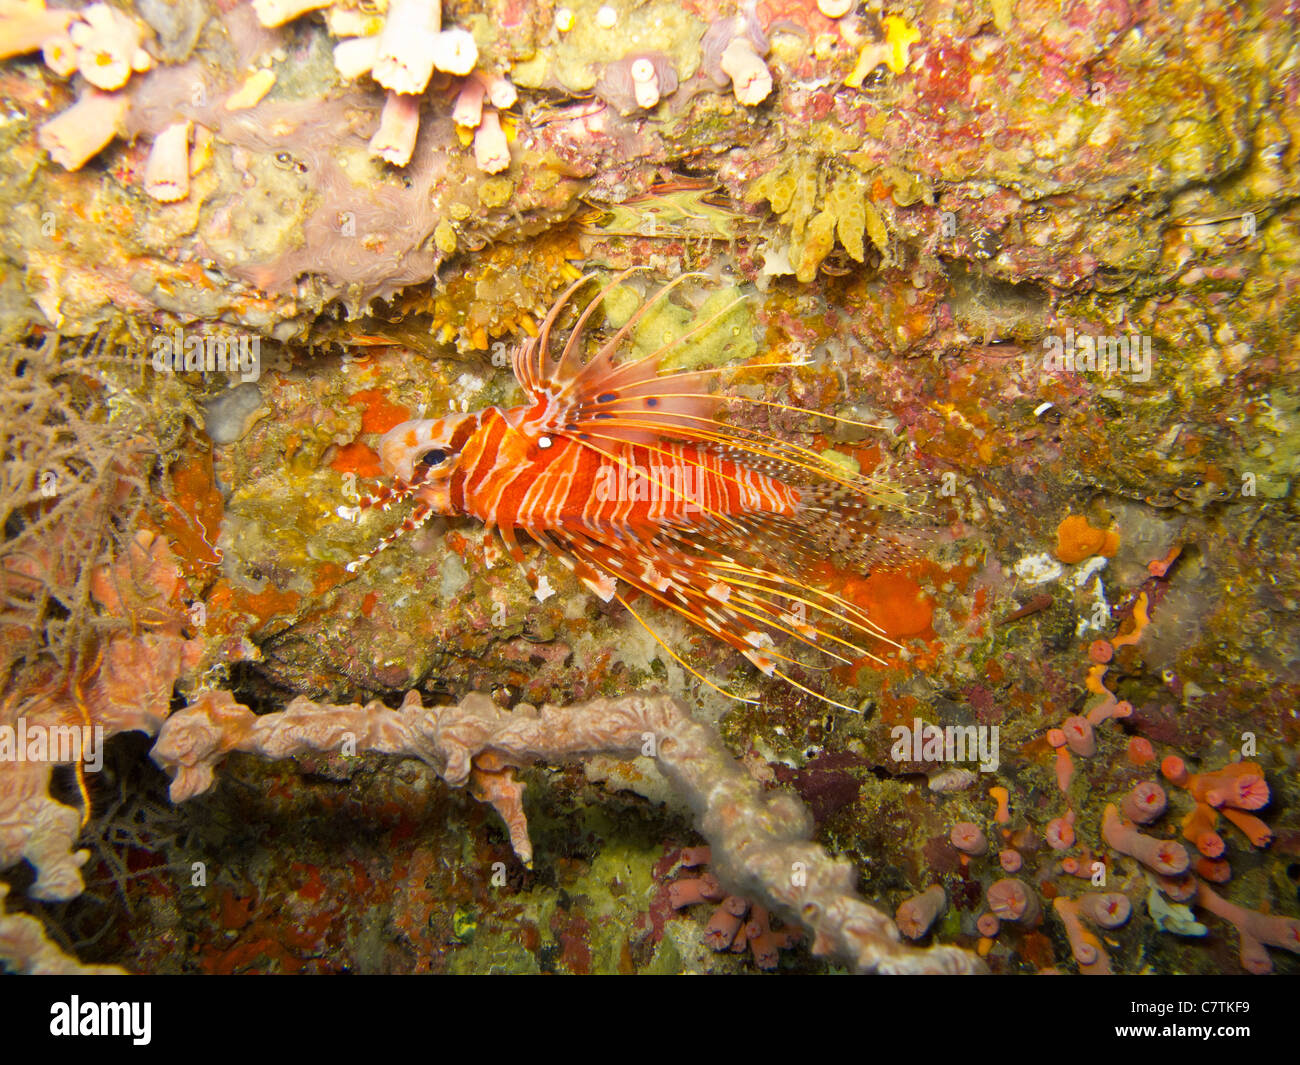 Spotfin Lionfish, anderen bunten aber giftige Kreatur. Stockfoto